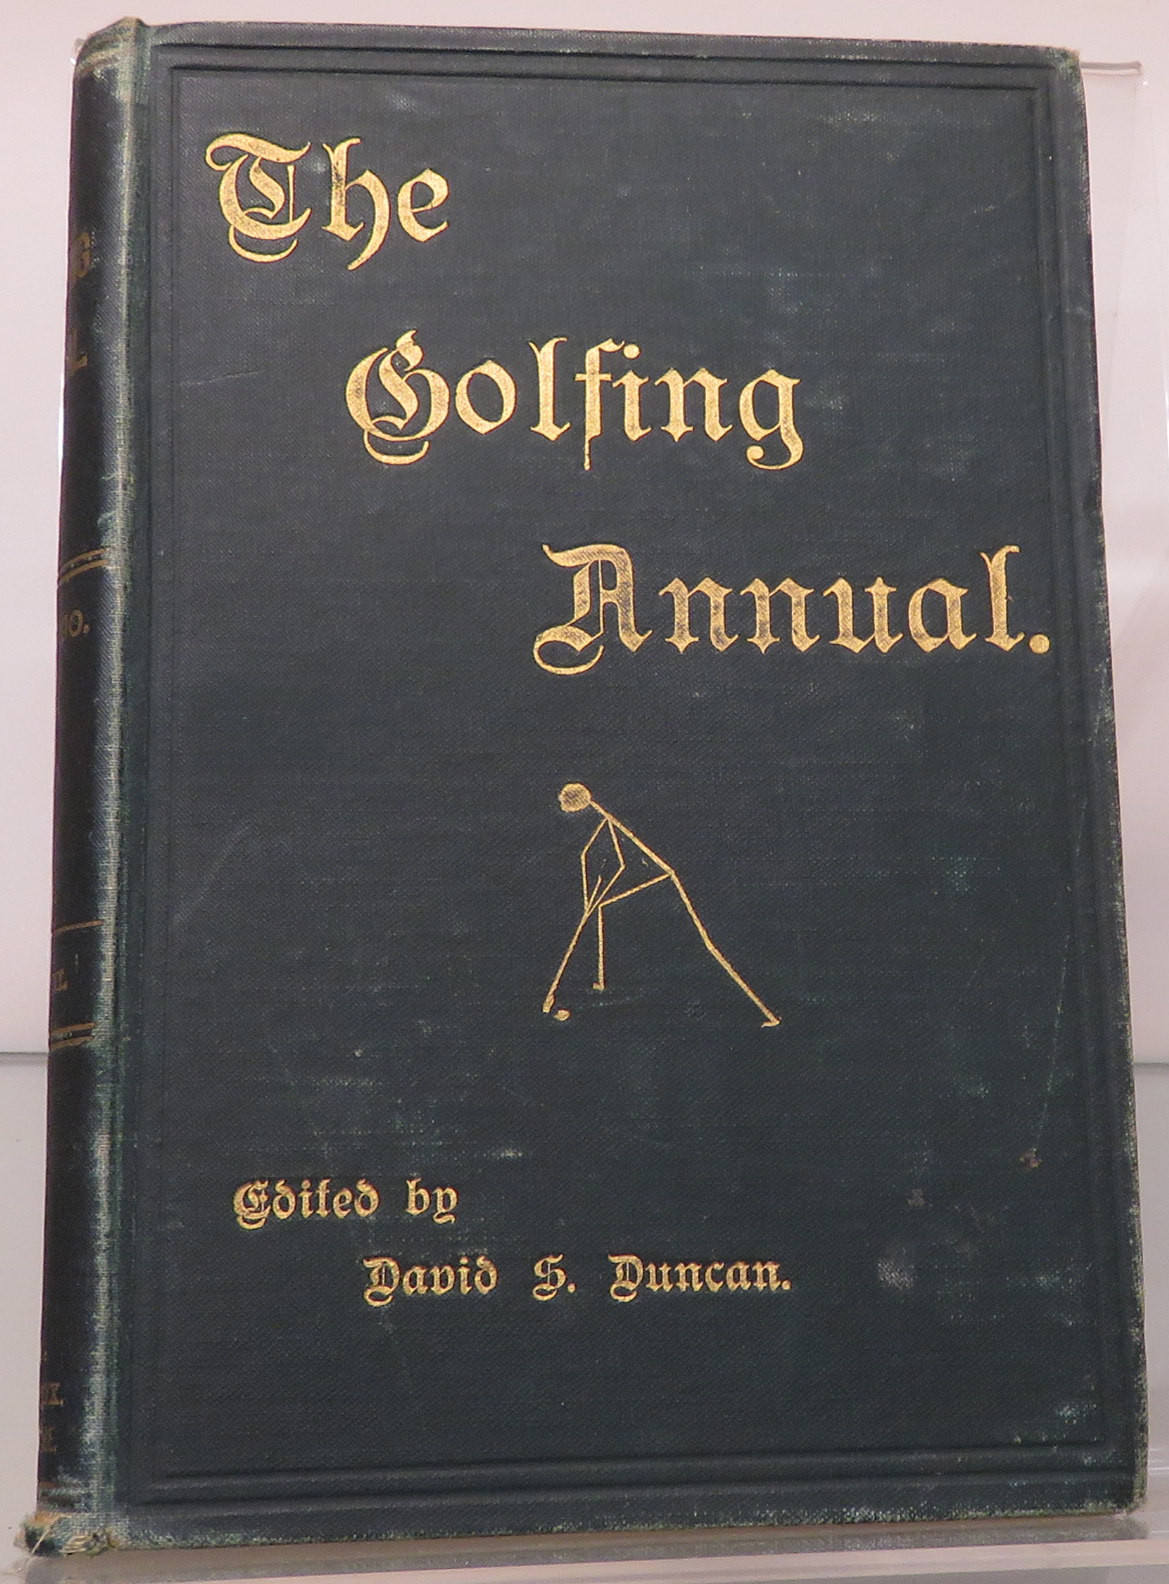 The Golfing Annual 1889-90 Volume III